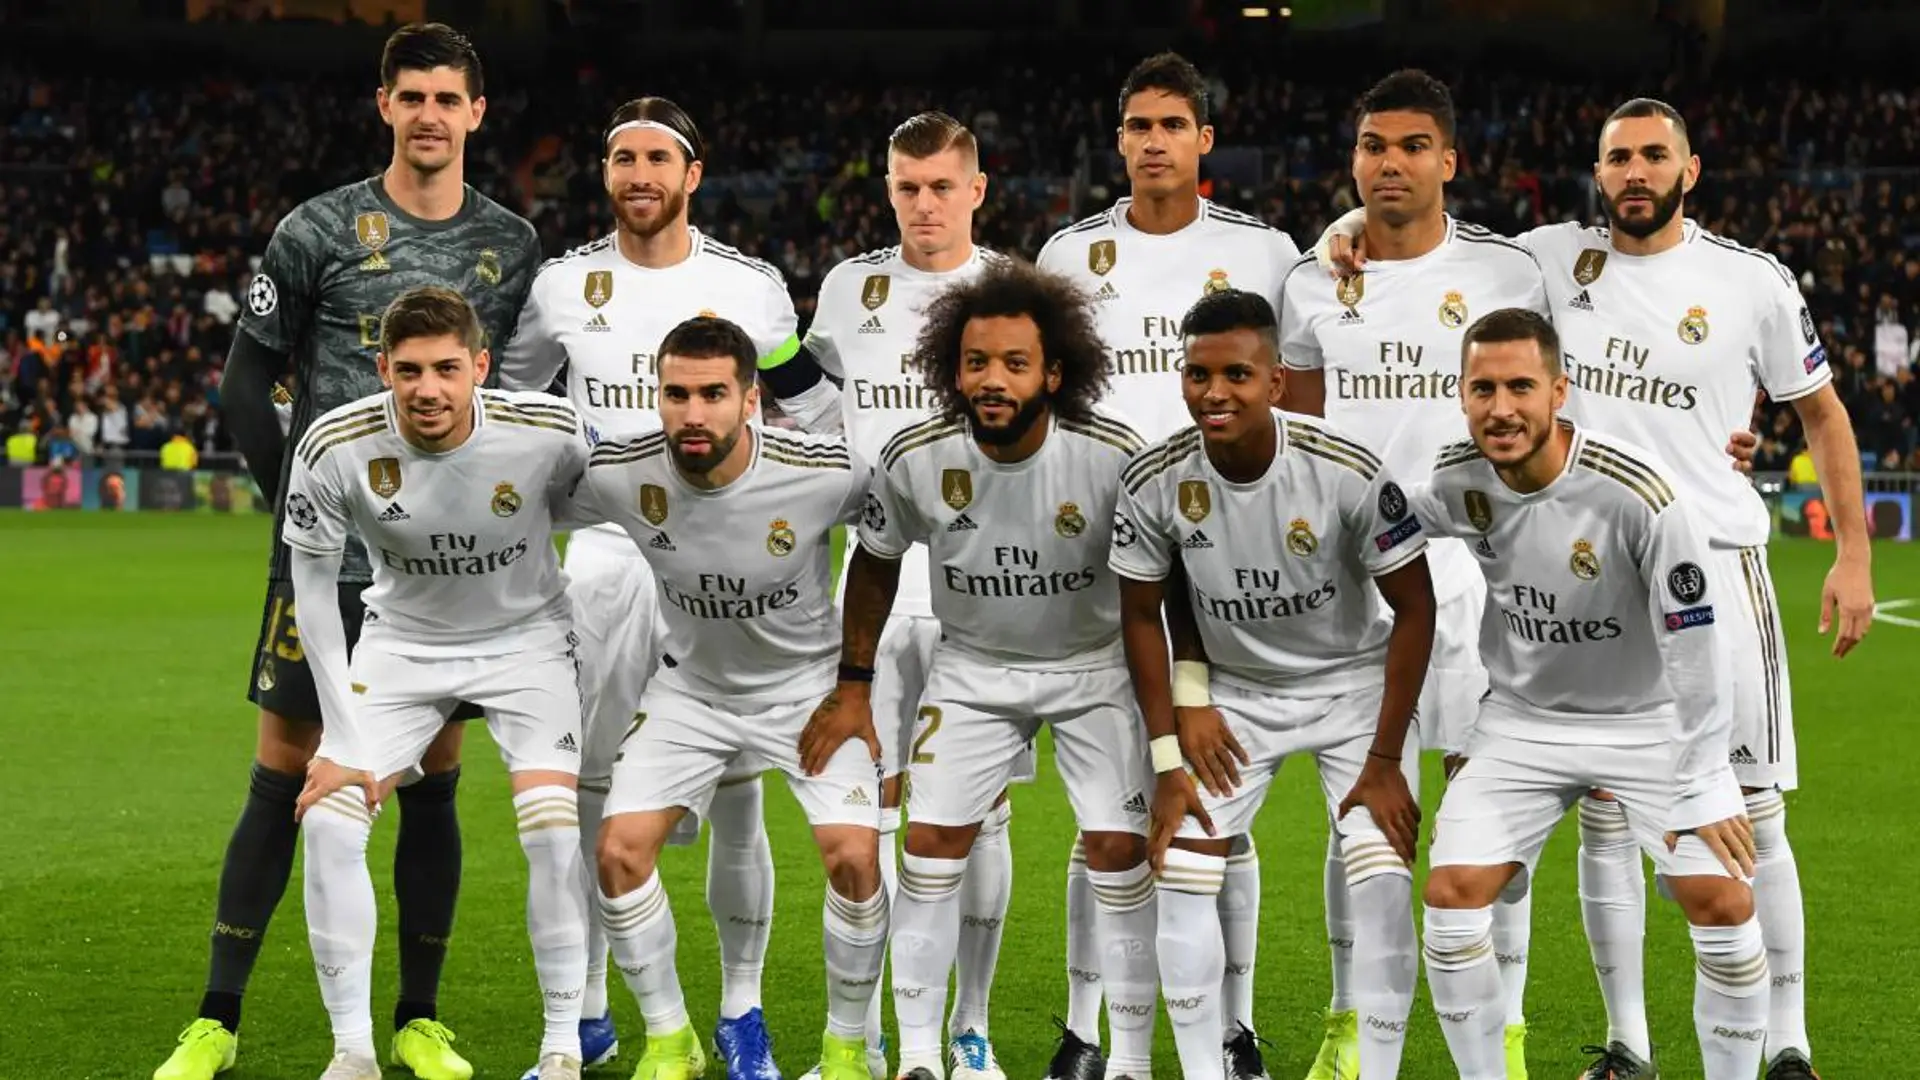 Los Blancos squad: 2019/20 players' ratings